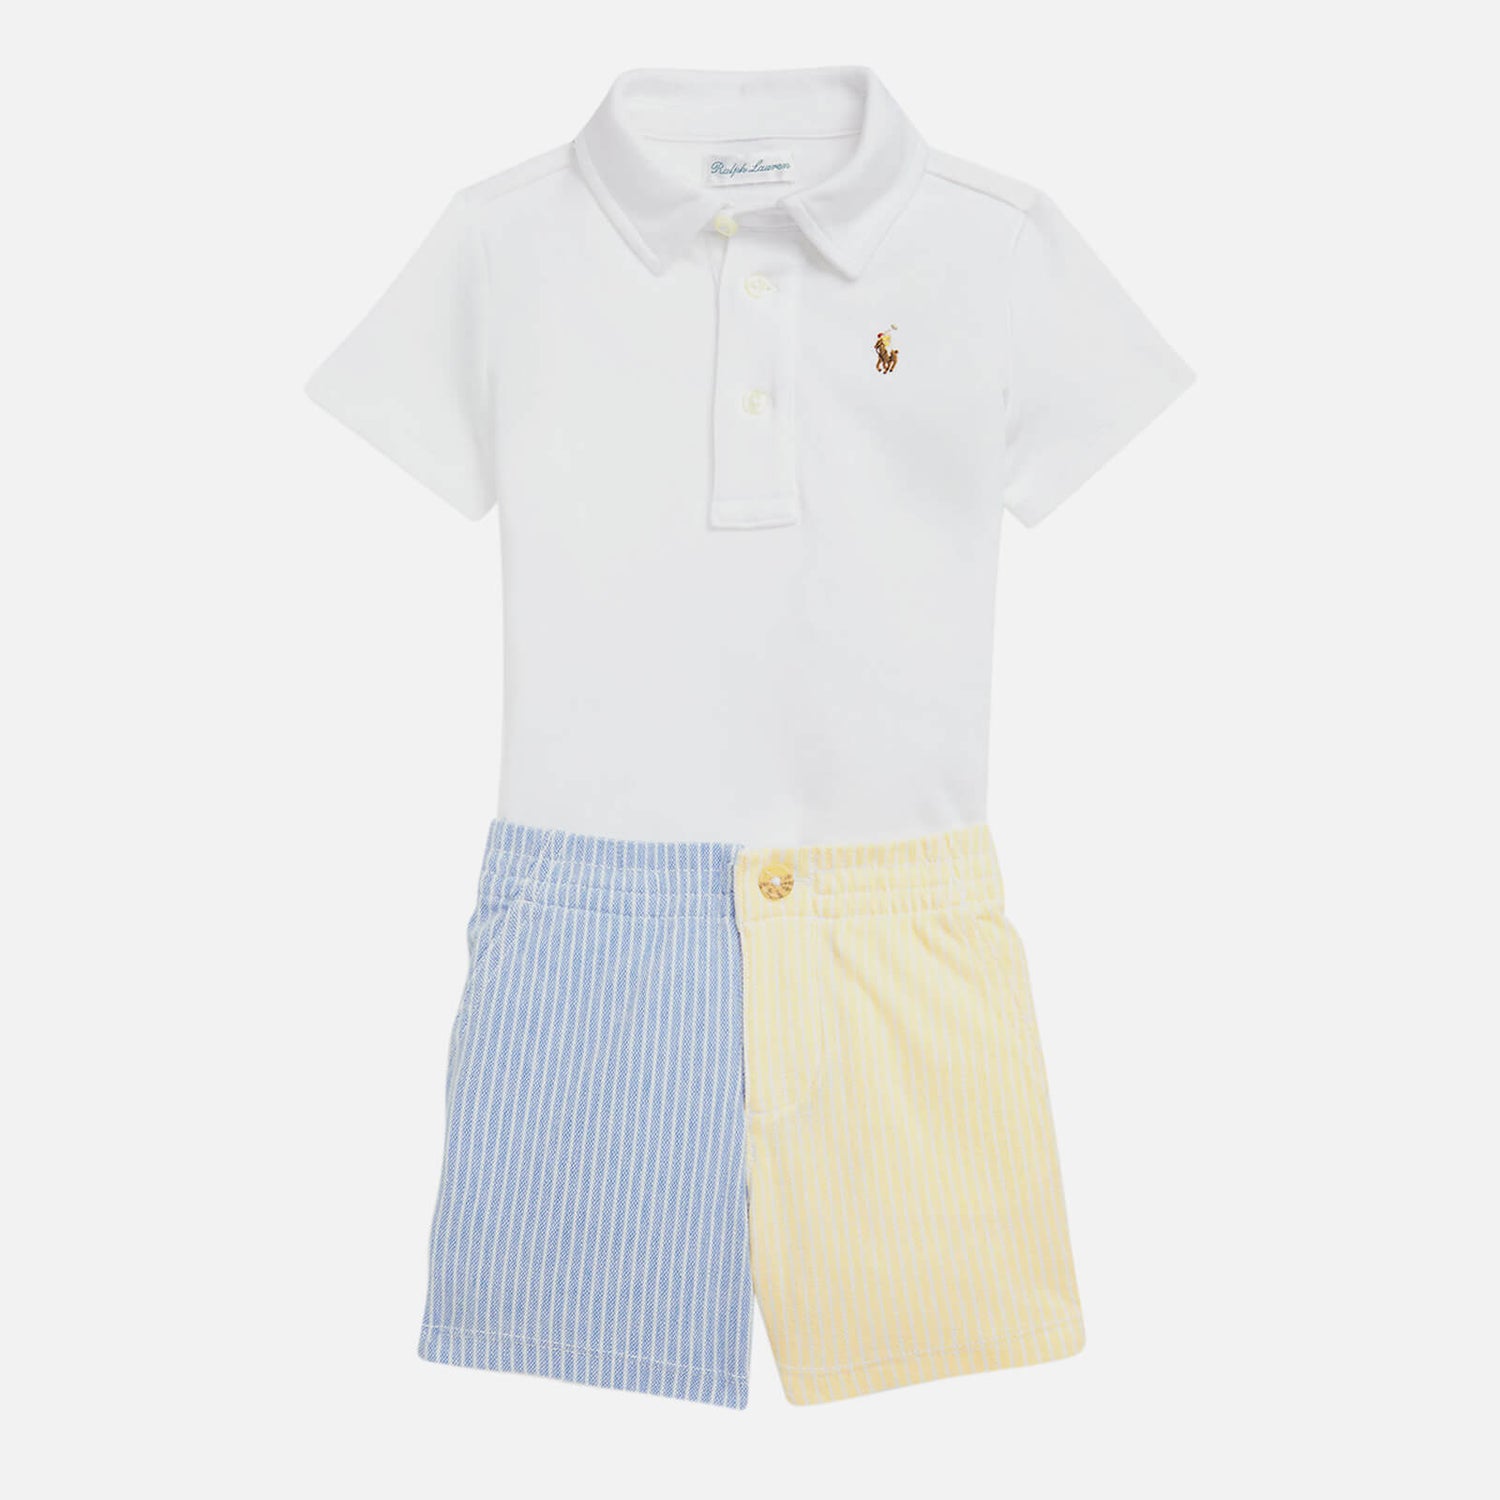 Polo Ralph Lauren Polo T-Shirt and Shorts Set